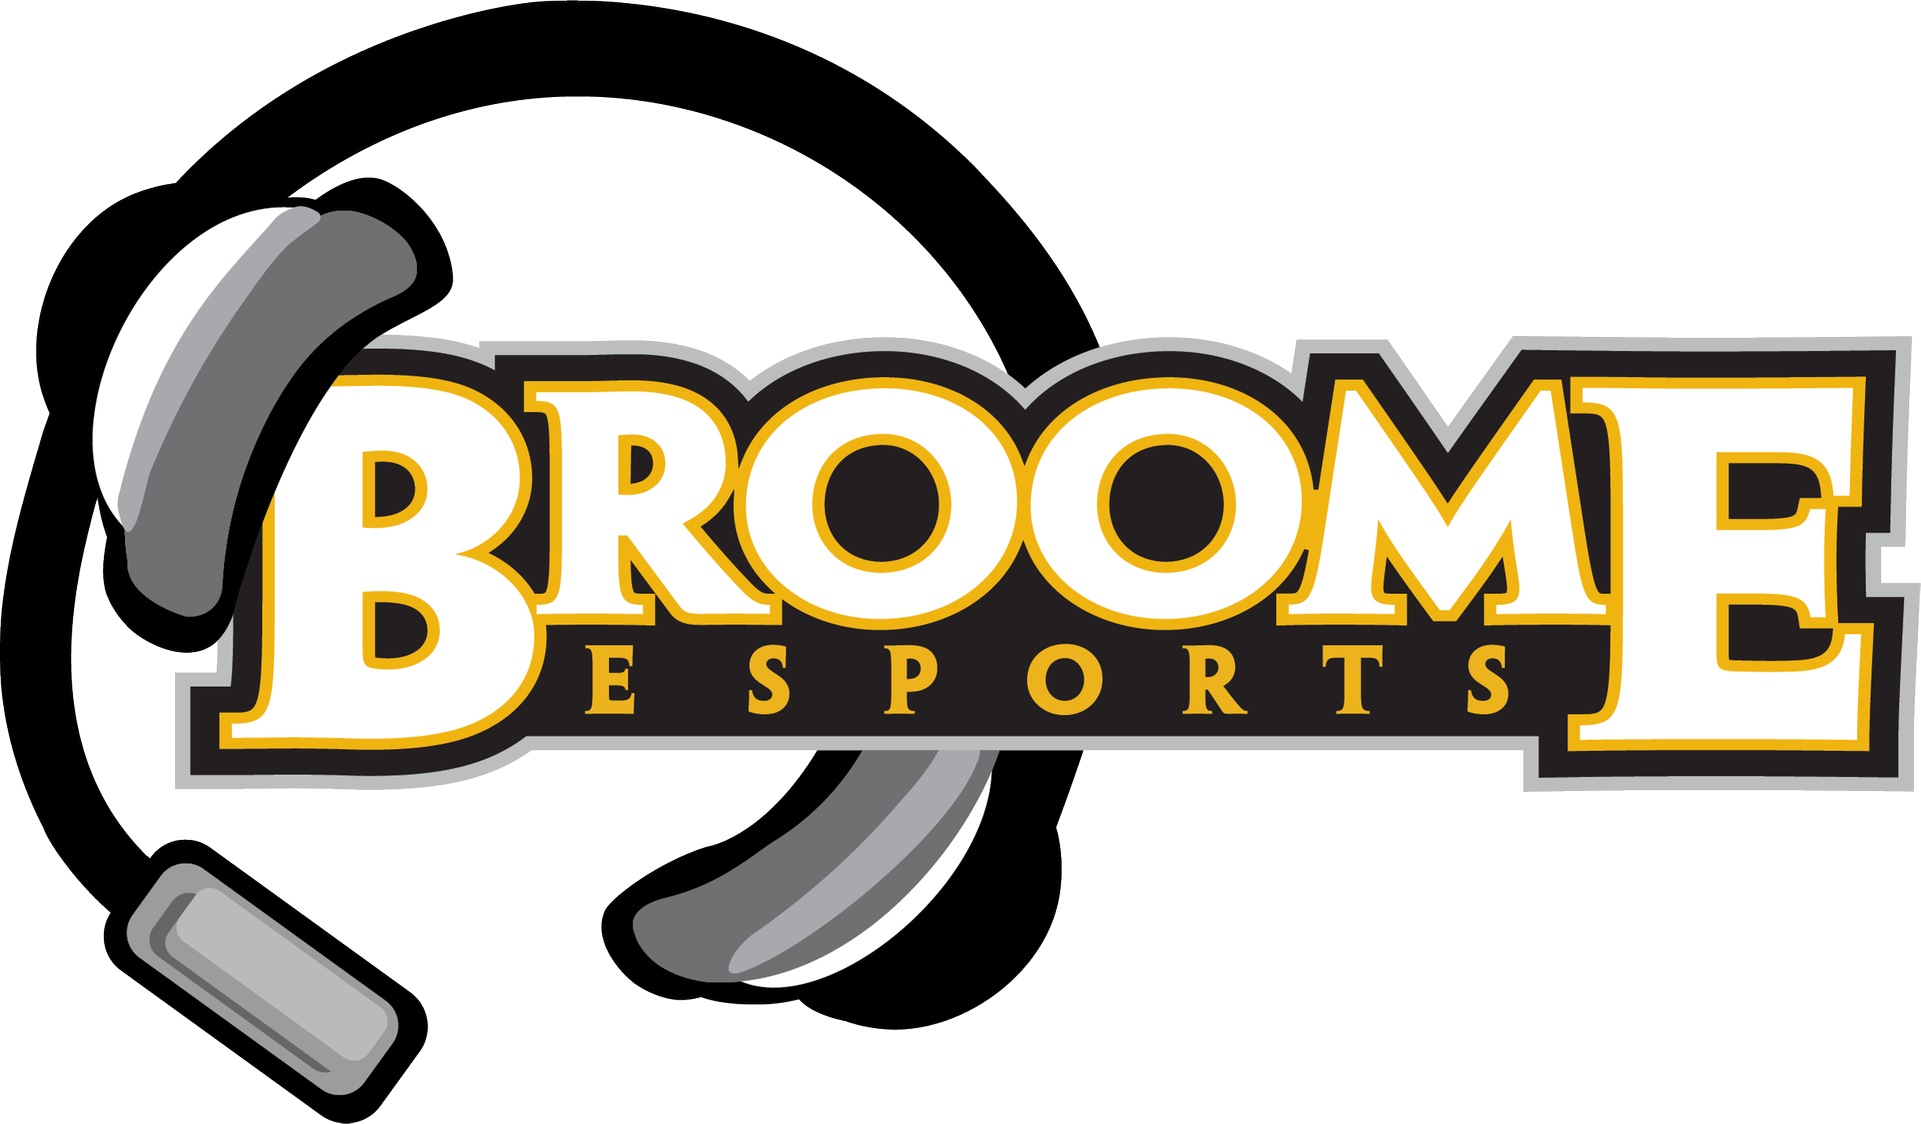 SUNY Broome Esports logo with headset.